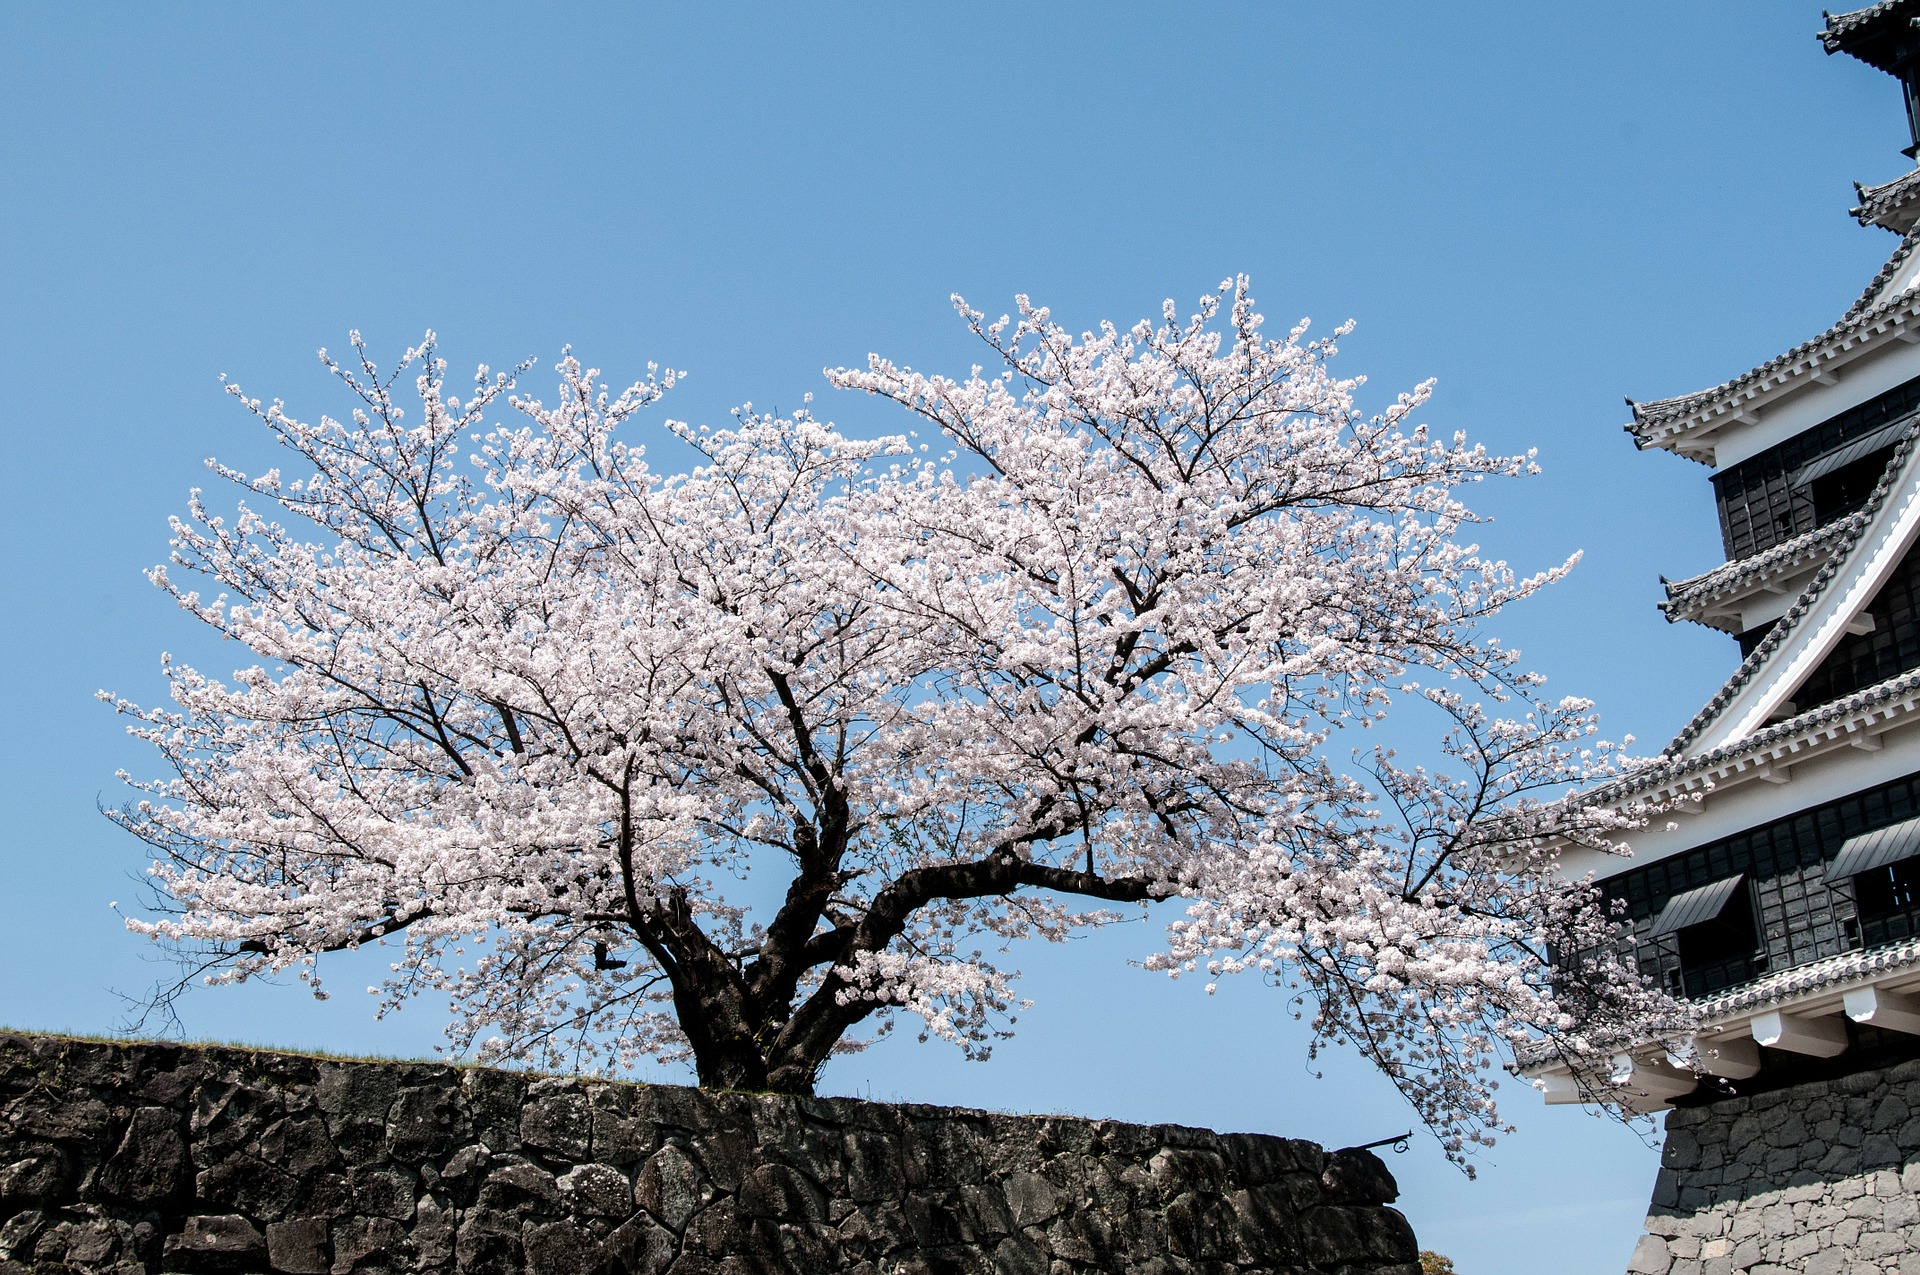 HANAMI: Japan’s Cherry Blossom Viewing Tradition | Marsman-Drysdale